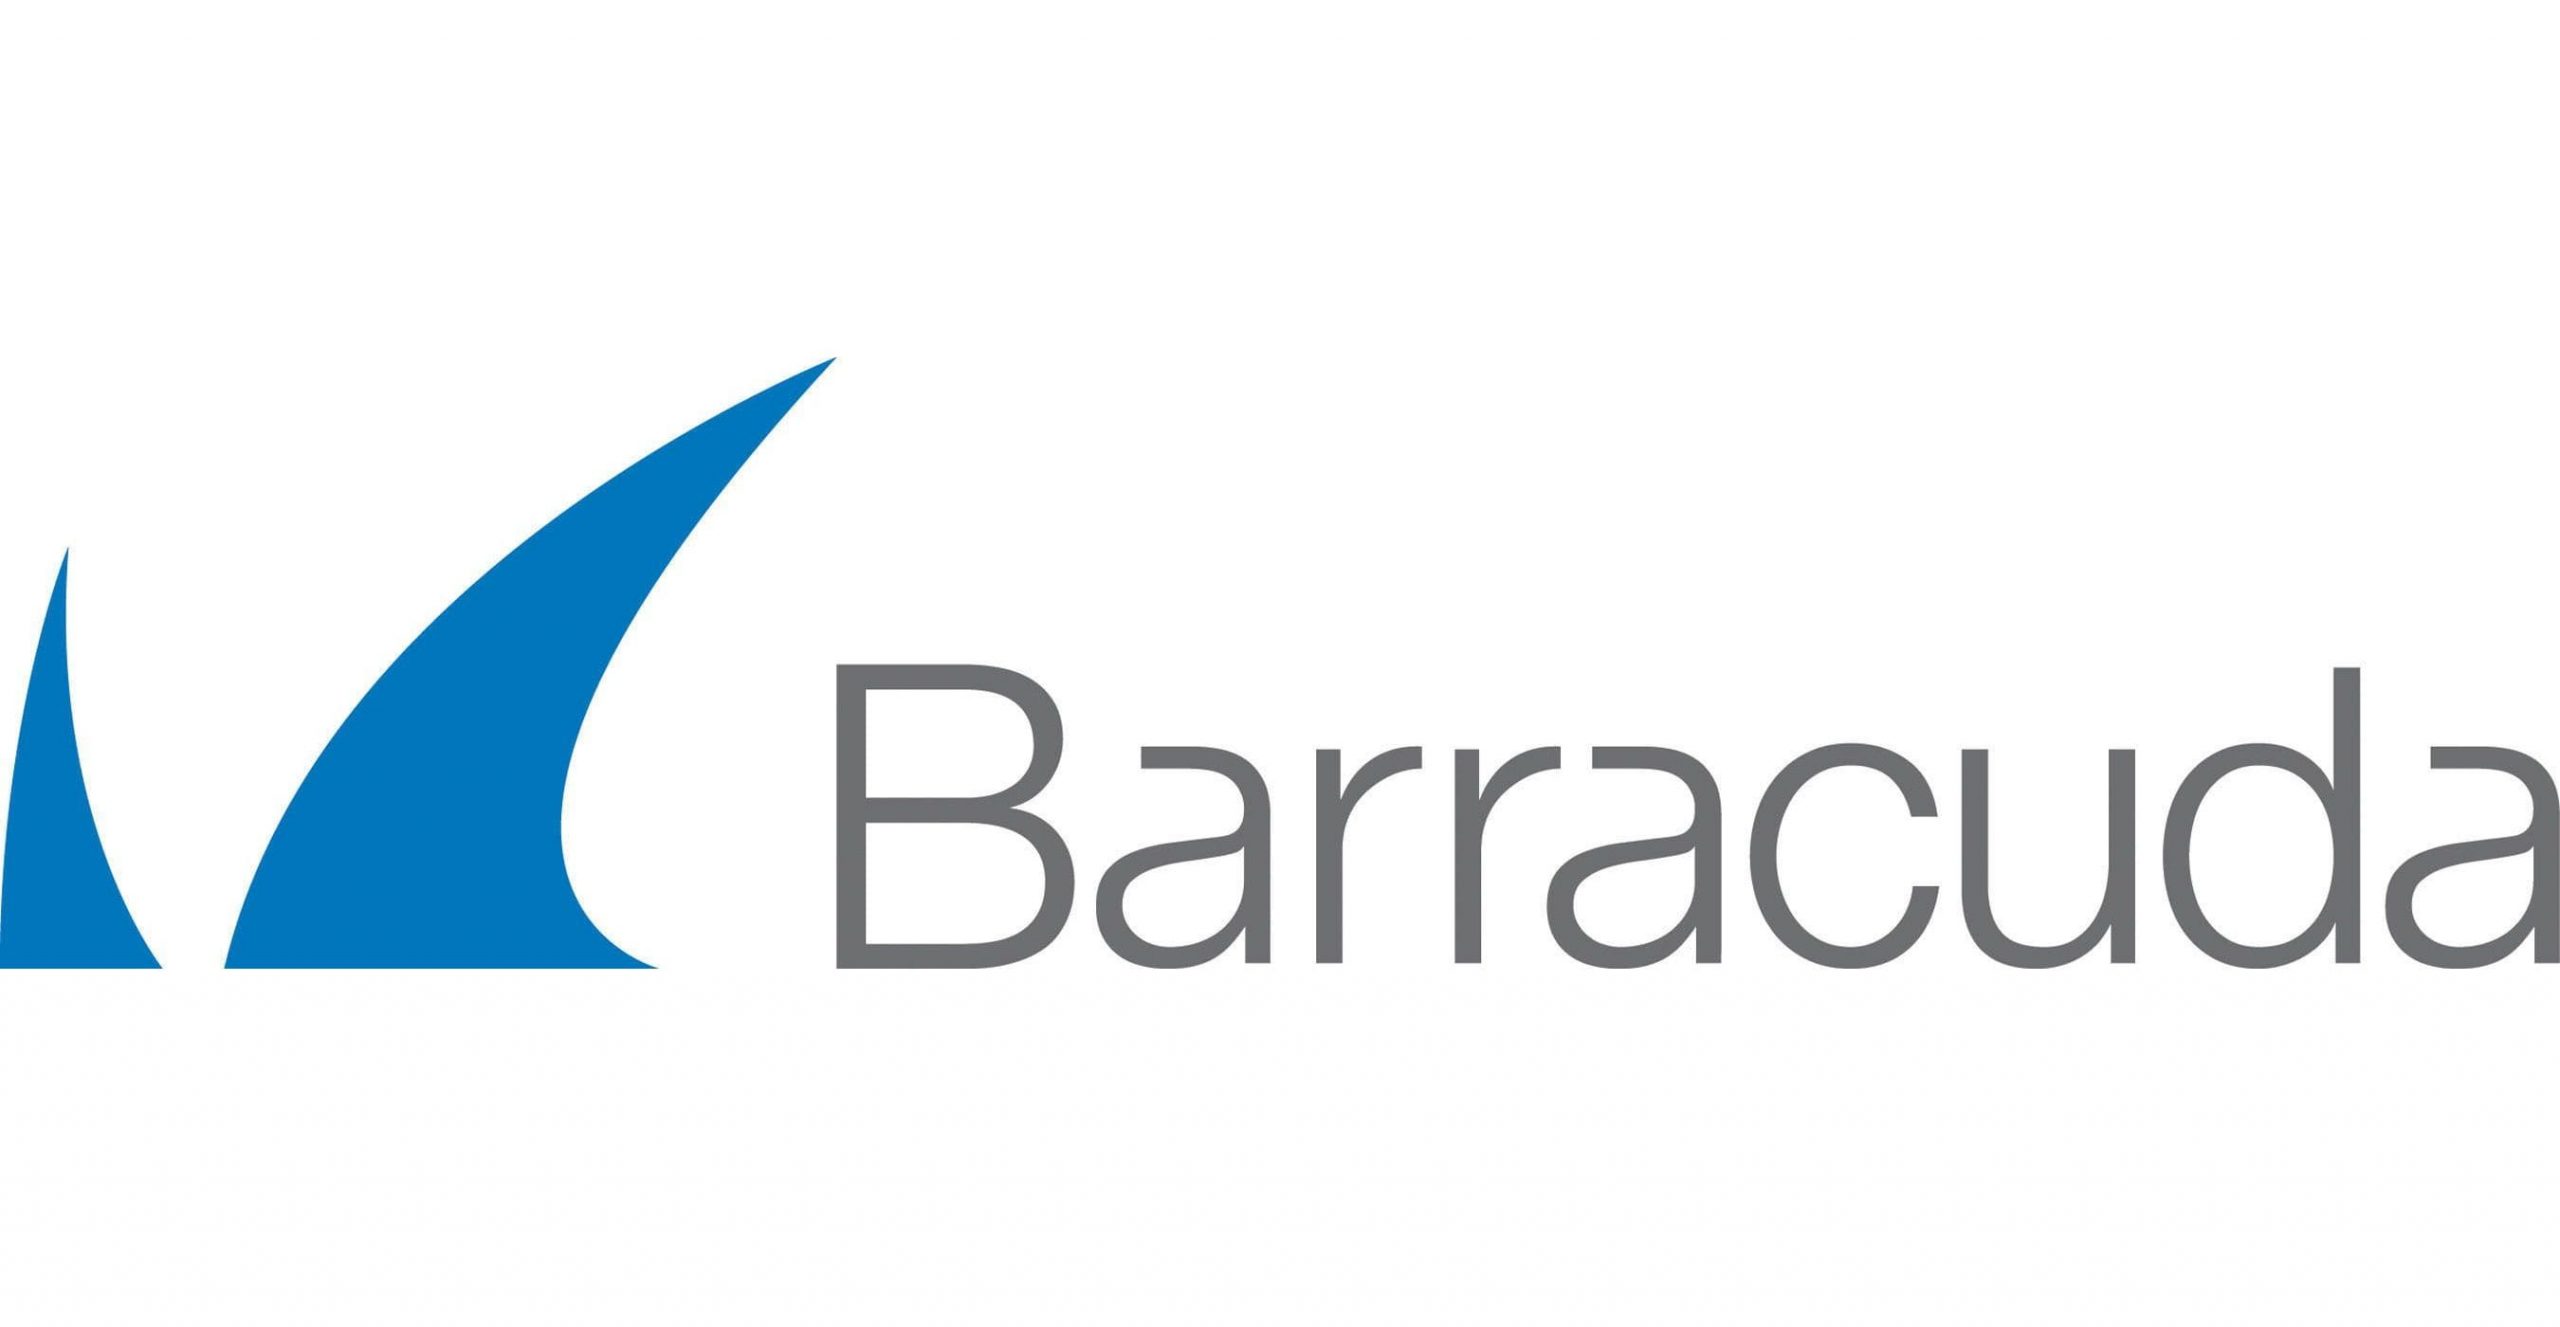 Barracuda-logo-scaled.jpg